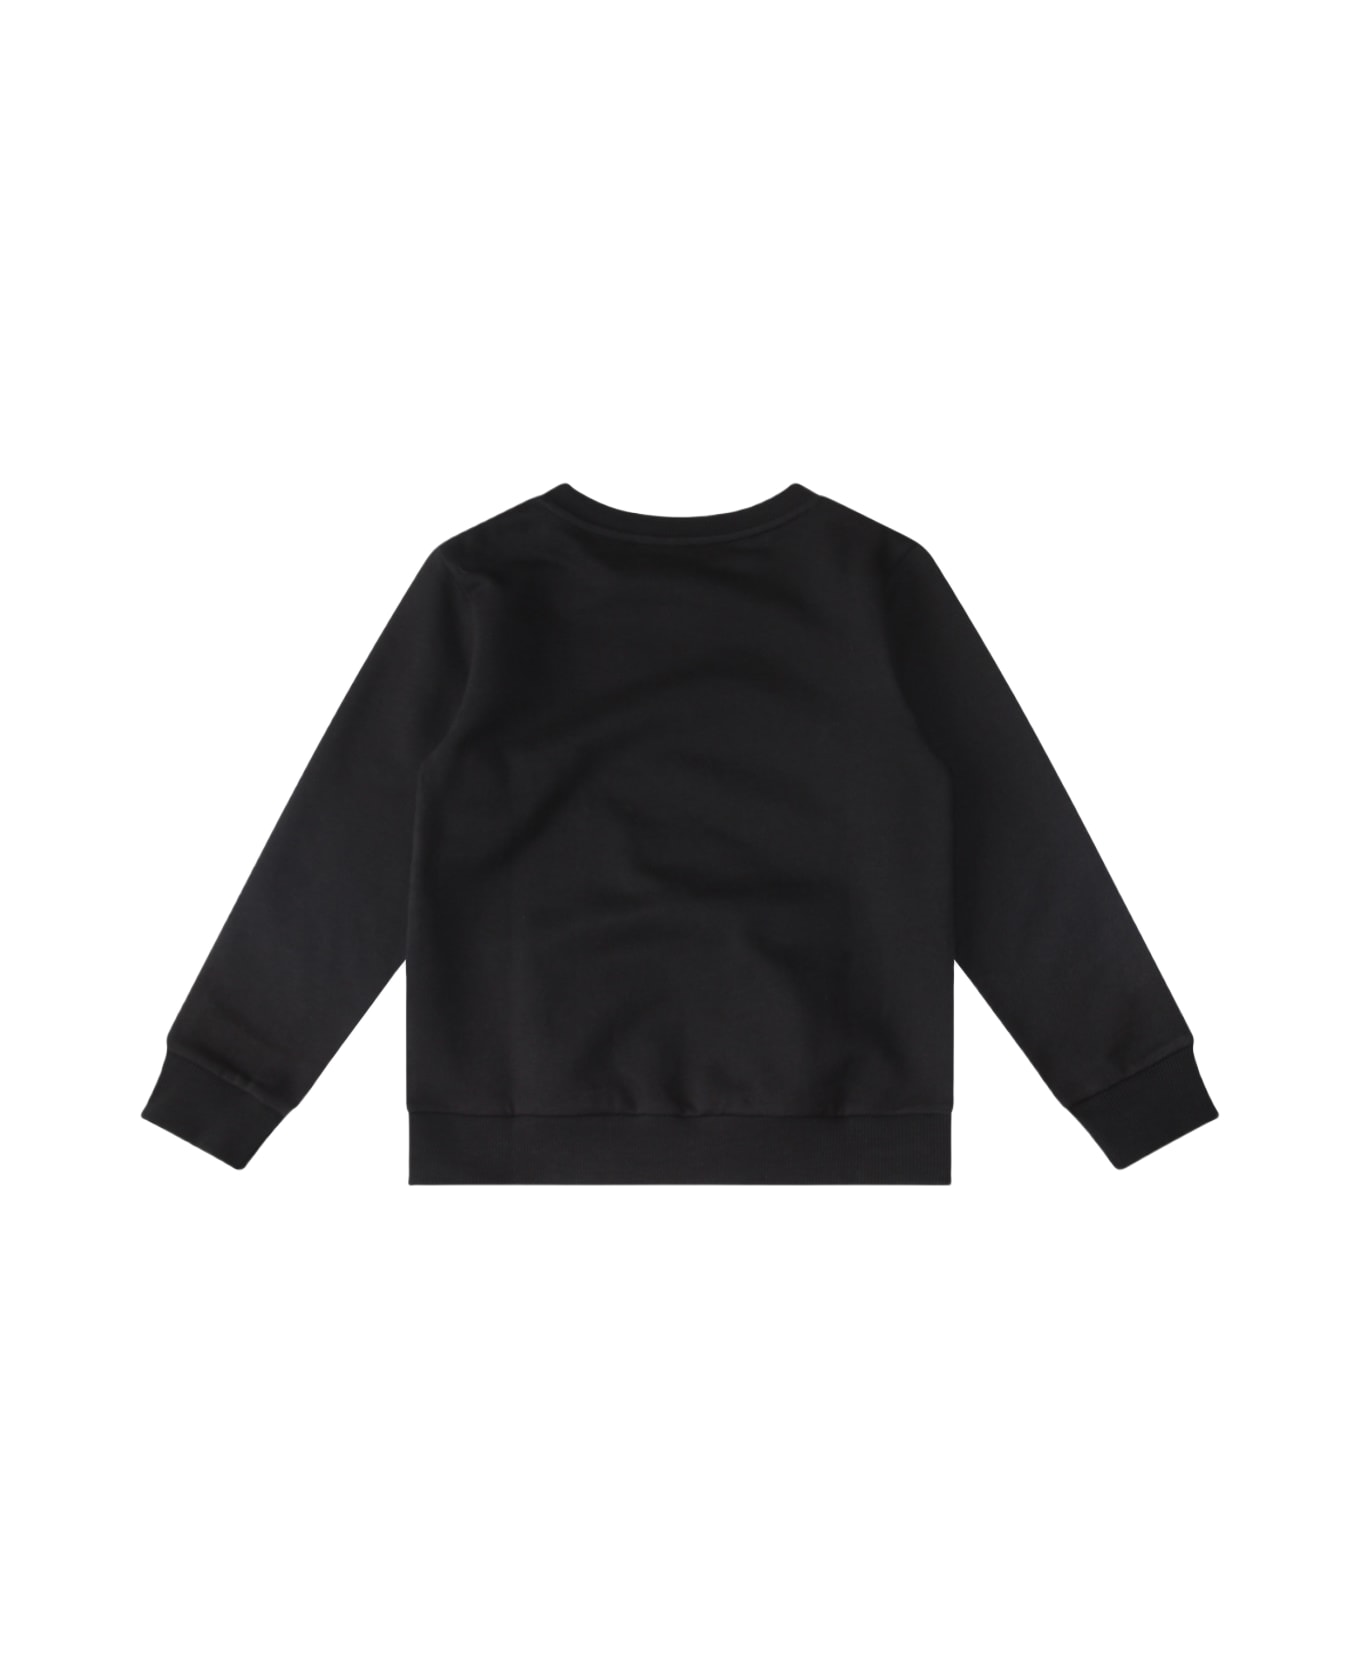 Balmain Black And Silver Sweatshirt - Black